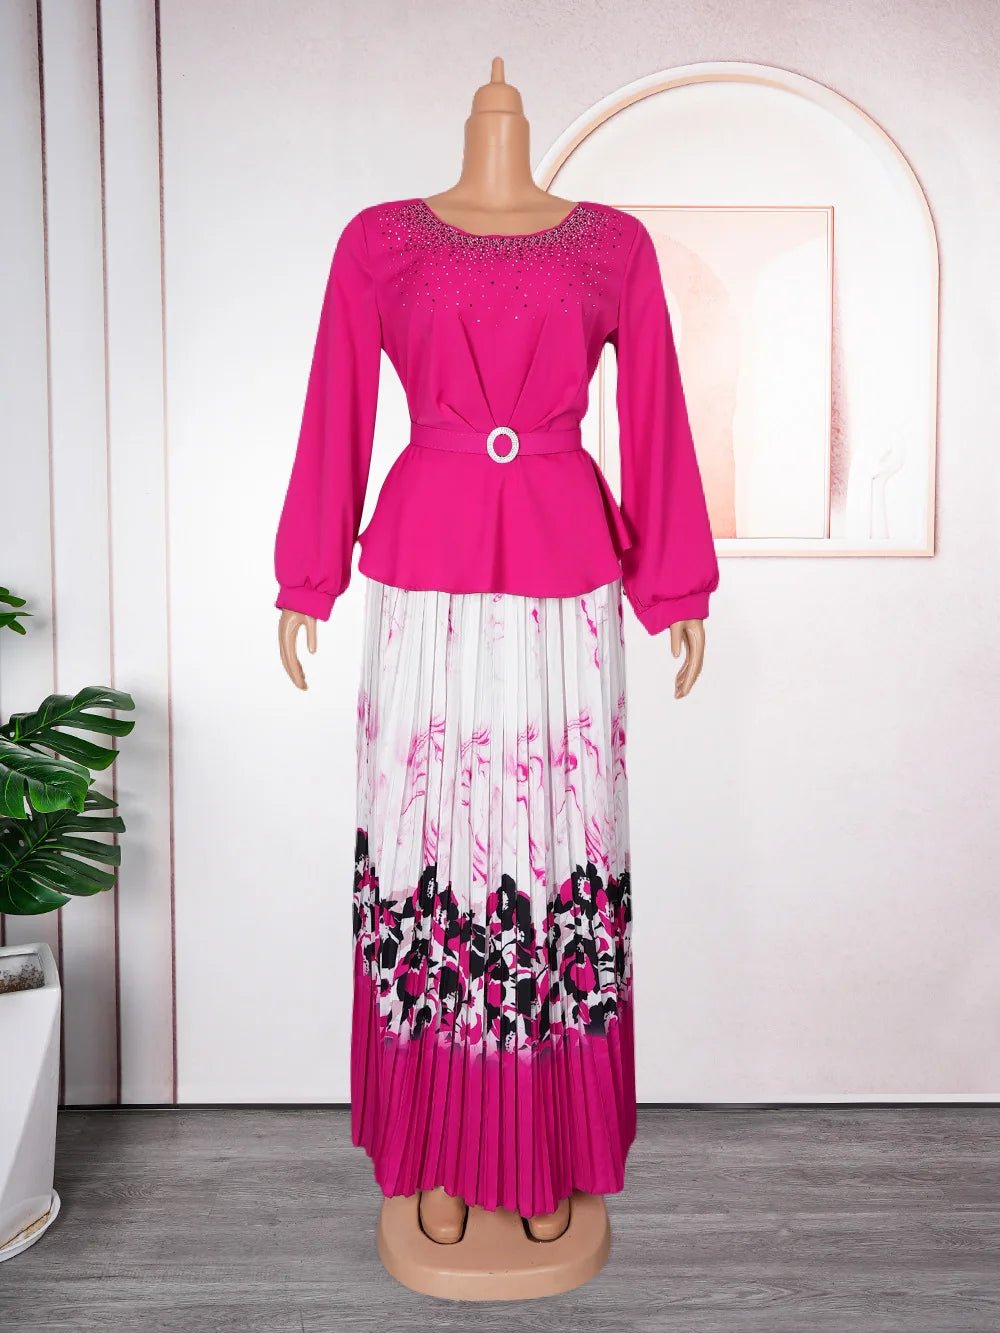 Stylish Plus Size African 2PC Sets: Dashiki Ankara Tops and Skirts for Elegant Wedding Party Dresses - Flexi Africa